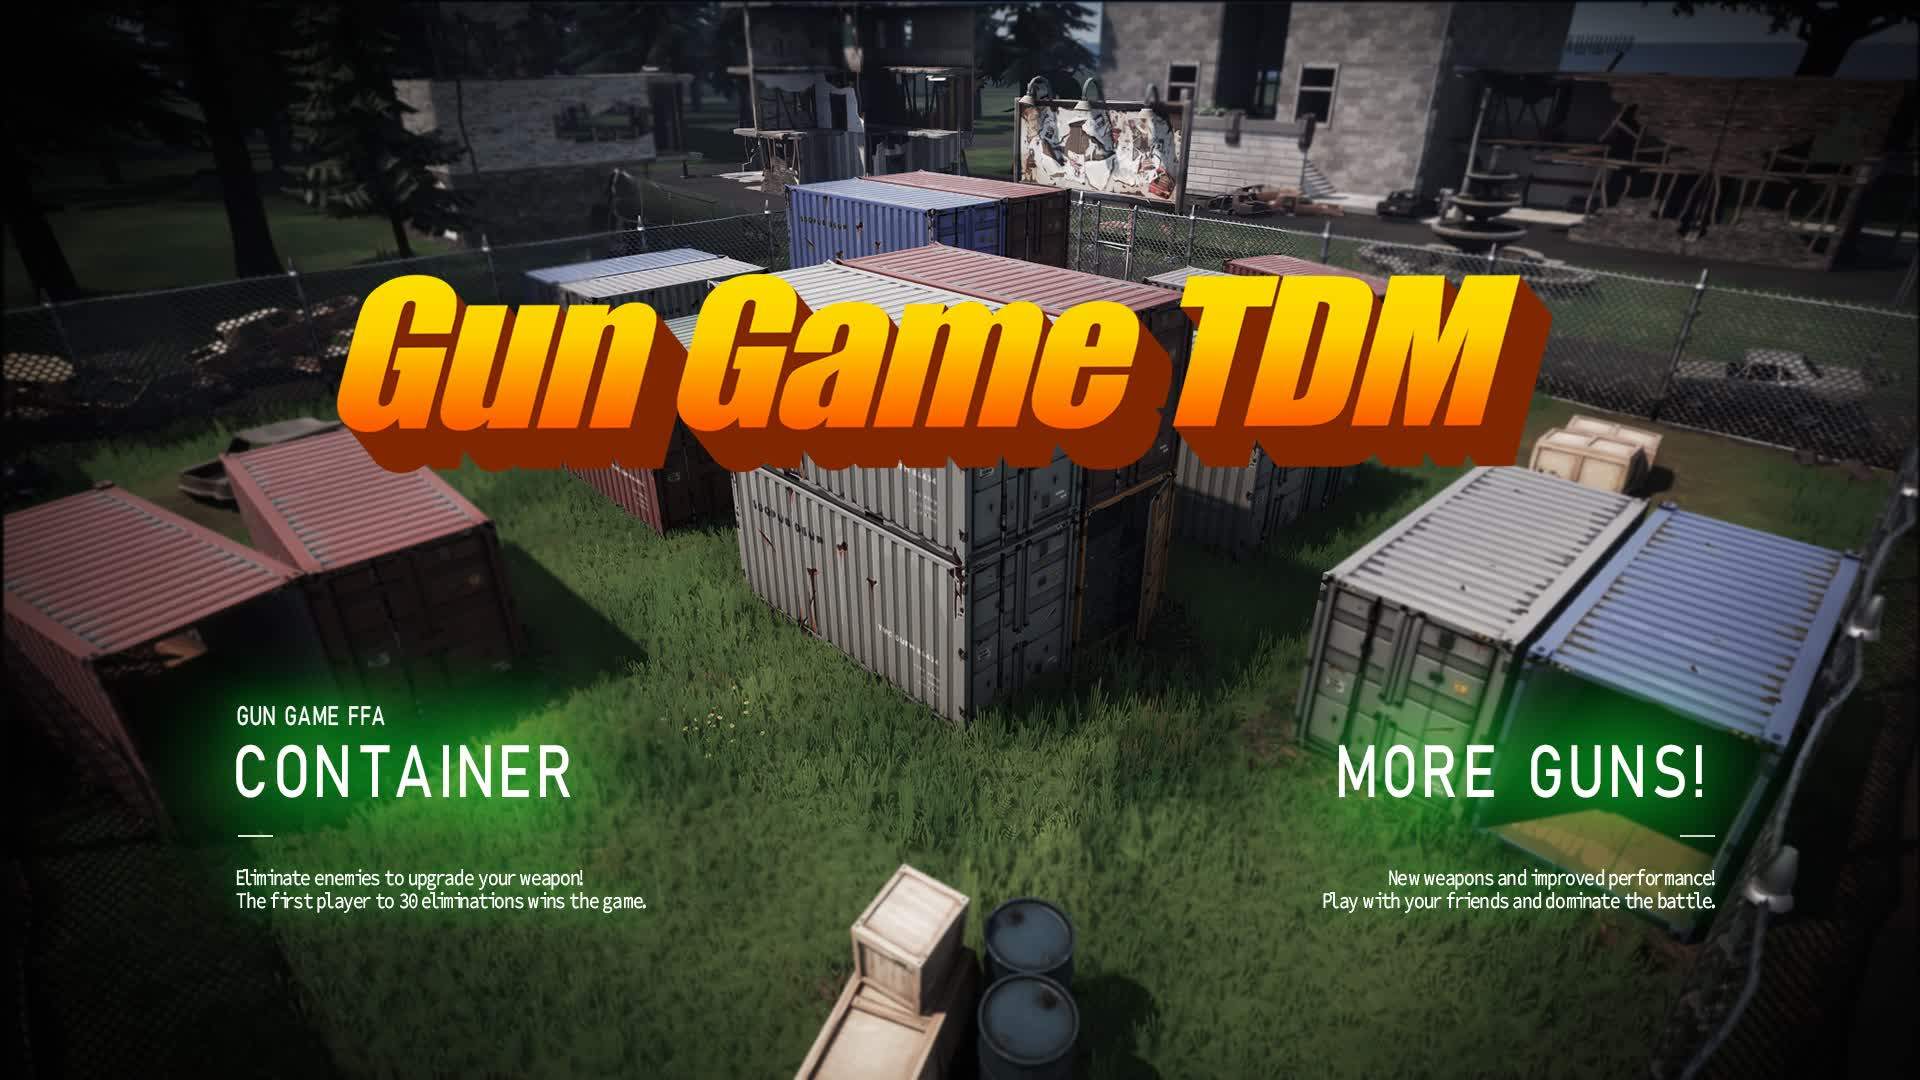 Container Gun Game Team Elimination